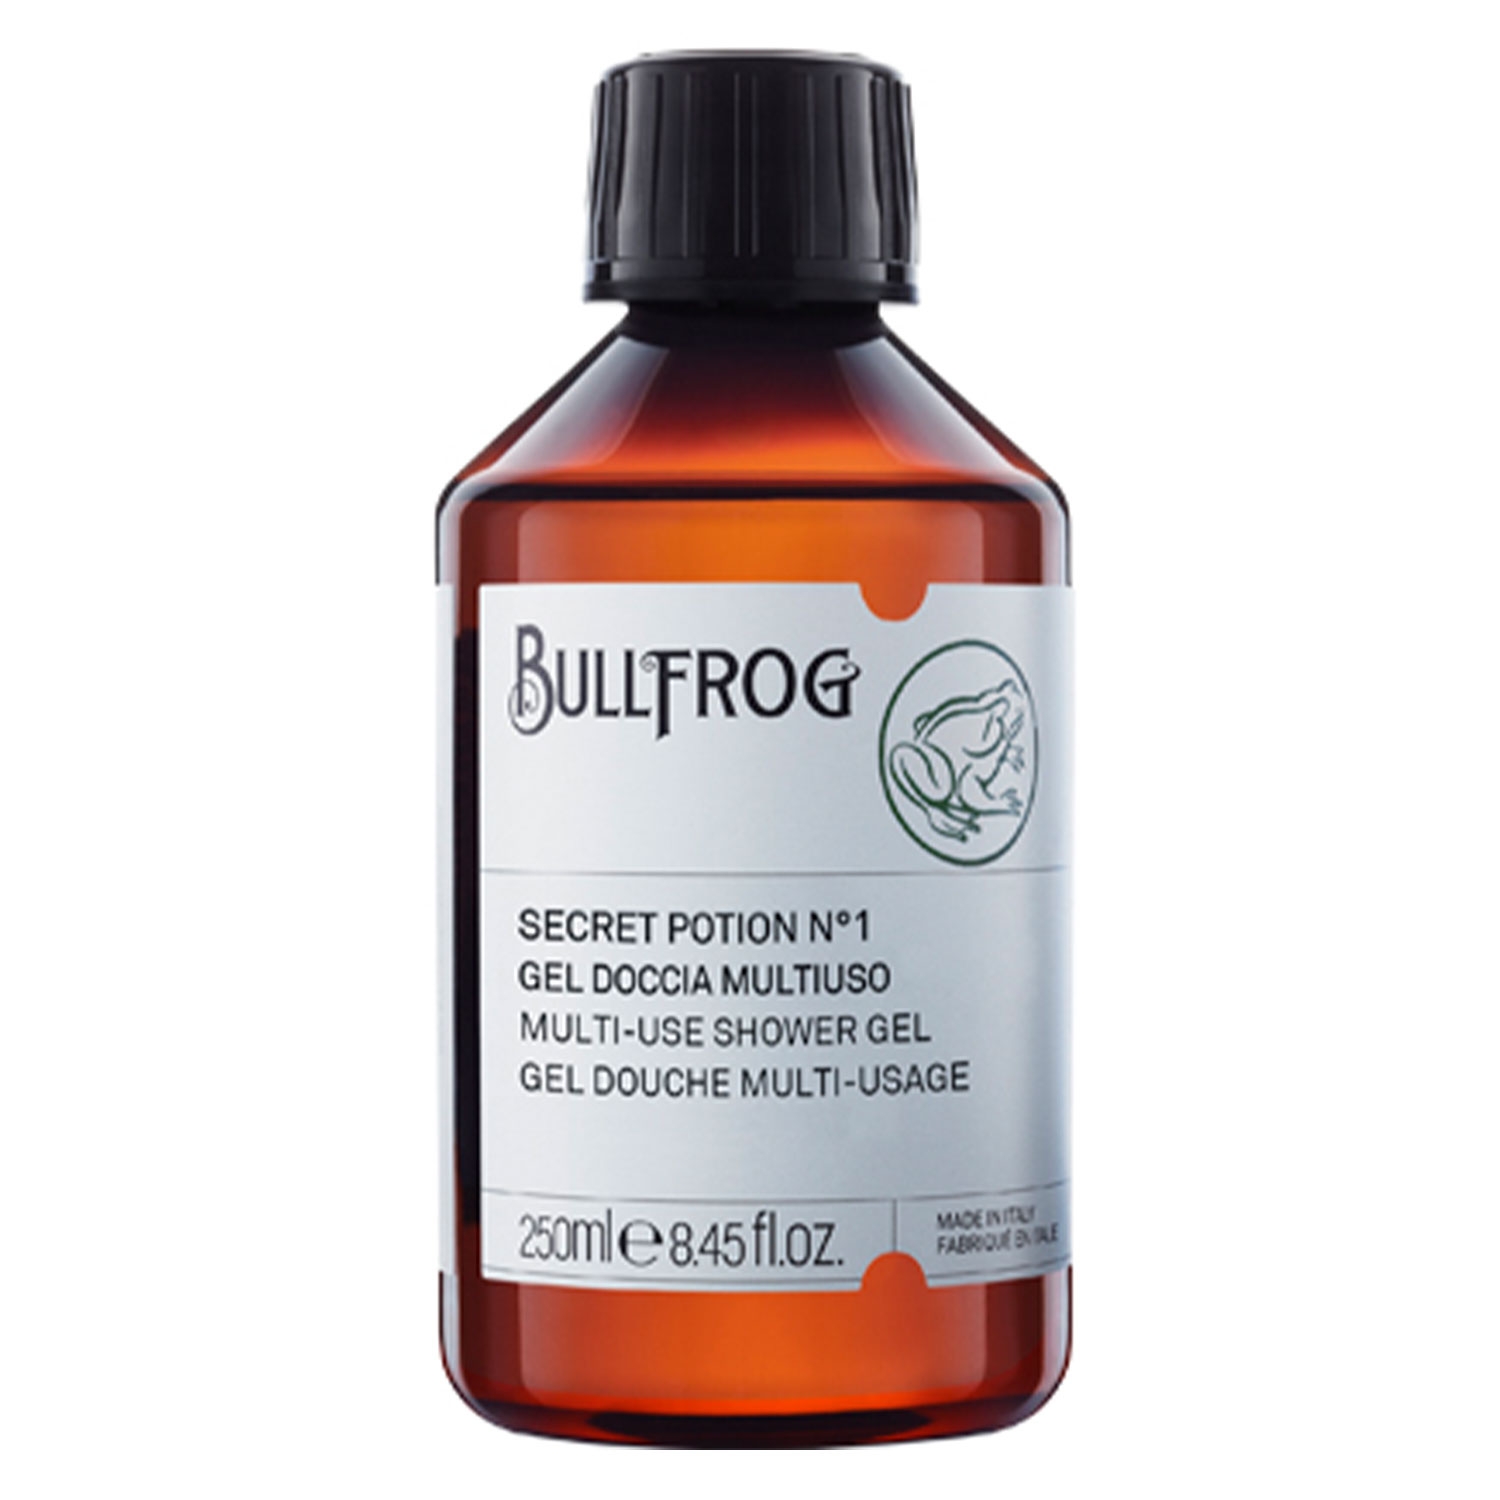 Produktbild von BULLFROG - Multi-Use Shower Gel Secret Potion N°1